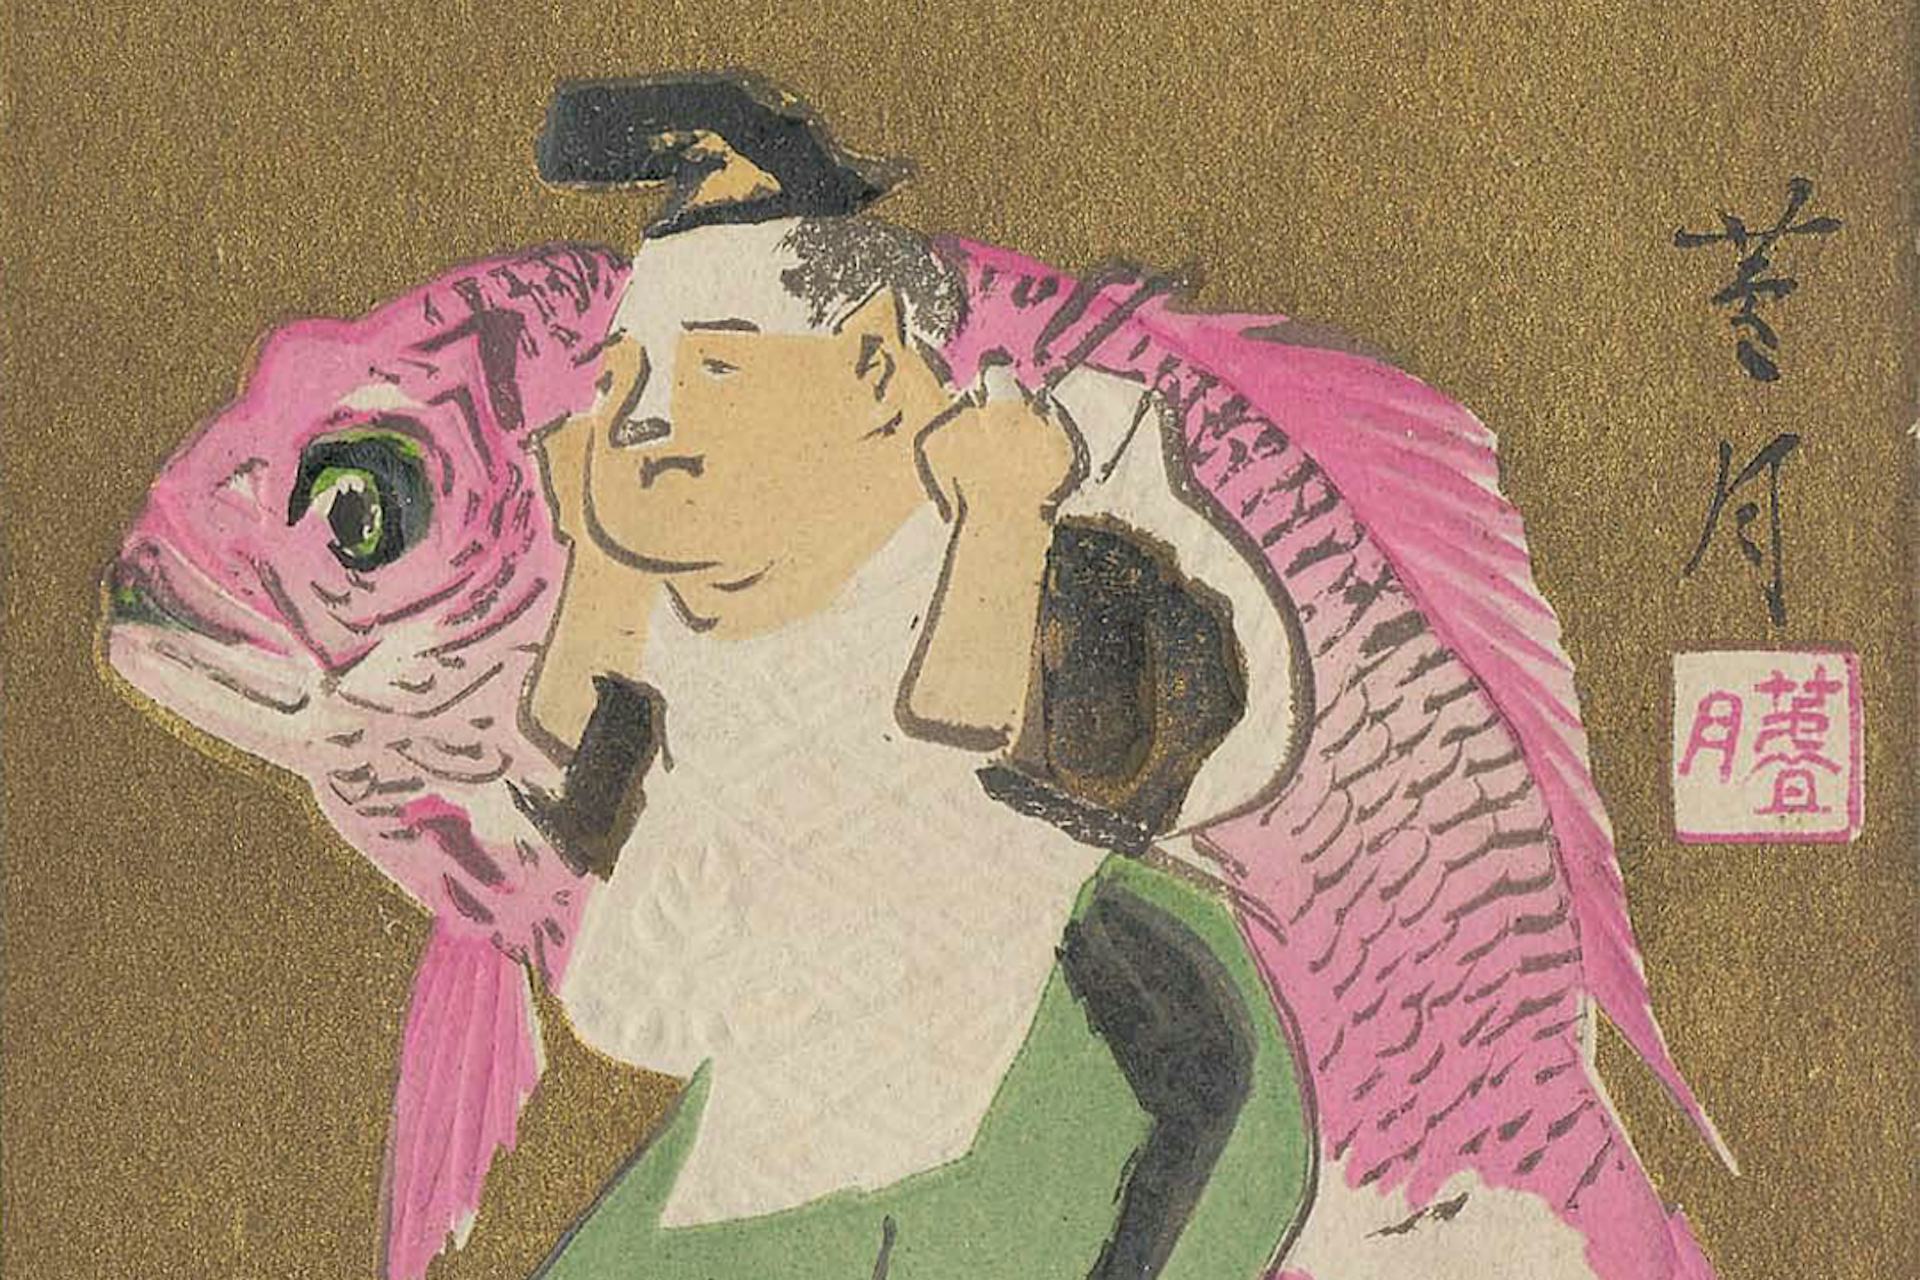 The Age of the Gods: A Japanese Creation Myth